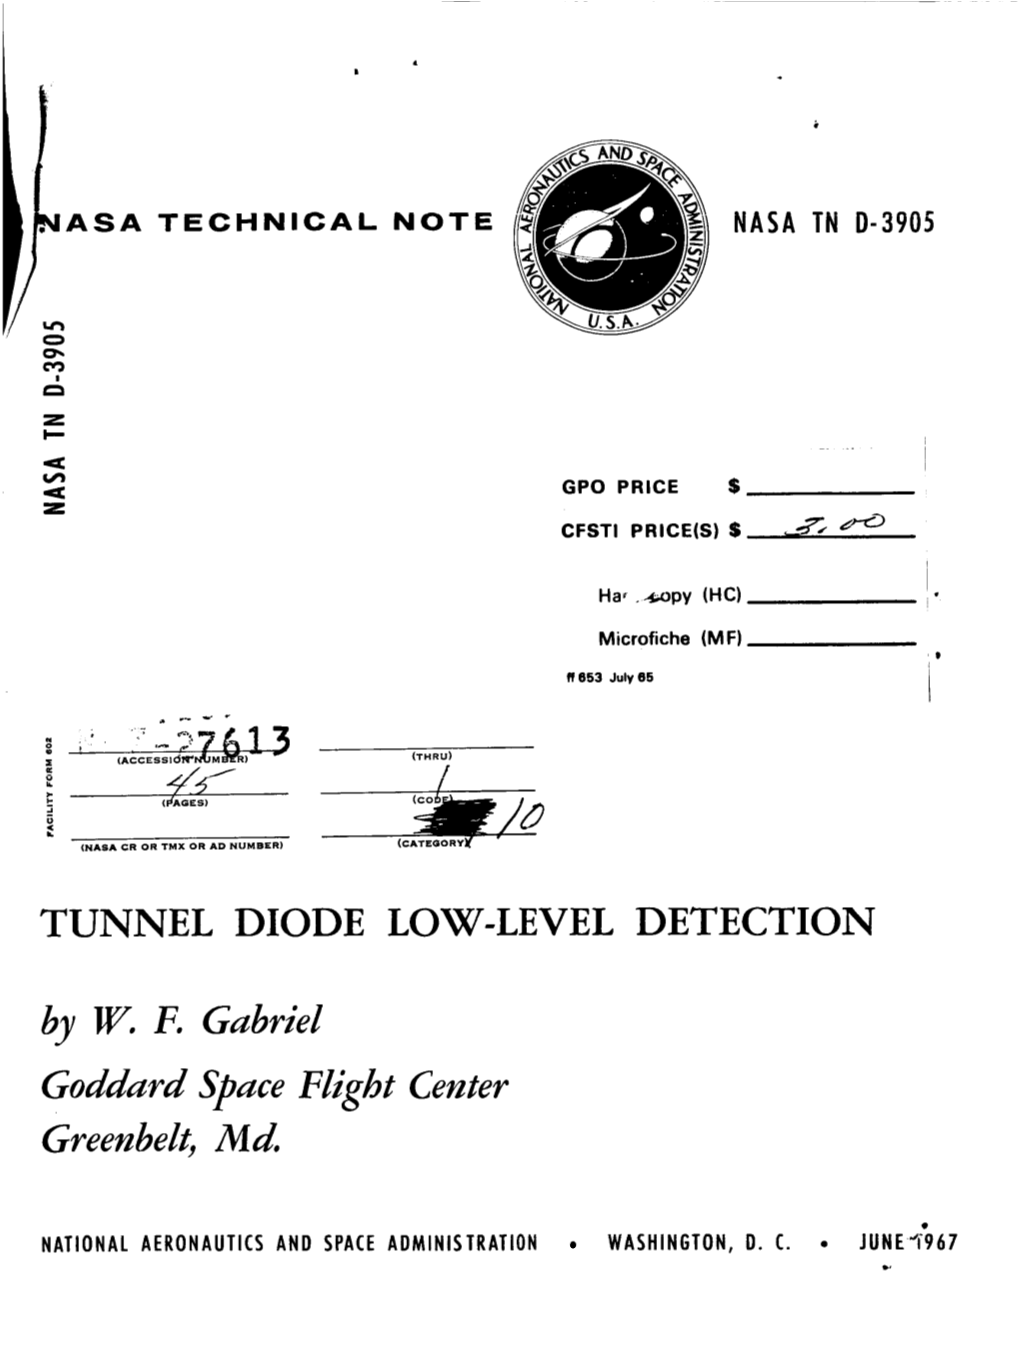 TUNNEL DIODE LOW-LEVEL DETECTION by W. F. Gabriel Goddard Space Flight Center Greenbelt, Md